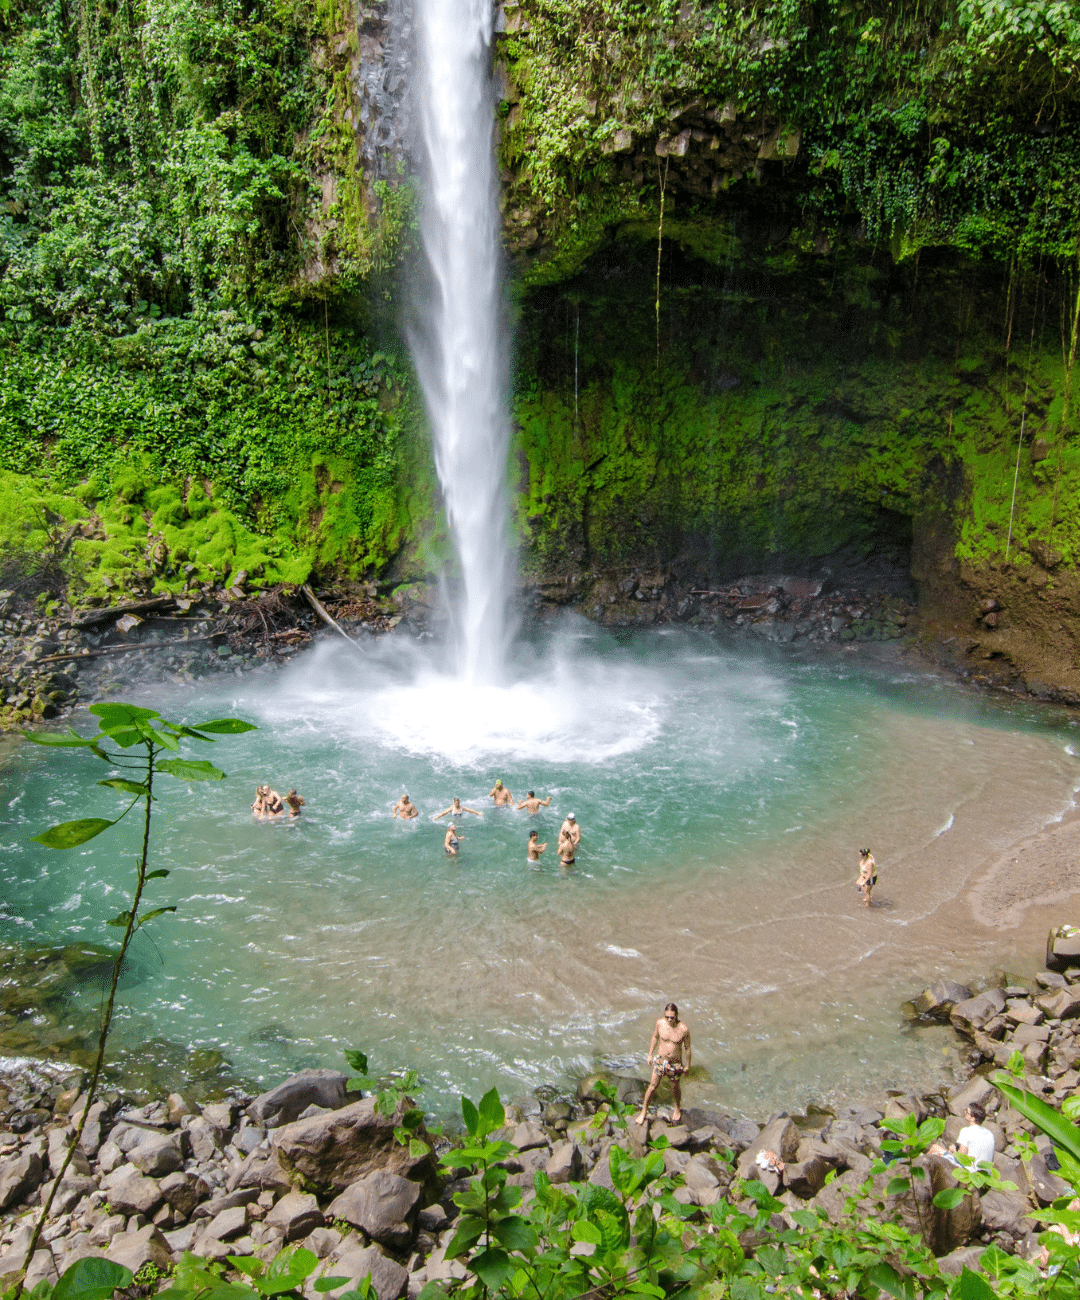 La Fortuna Waterfall with people in - Costa Rica